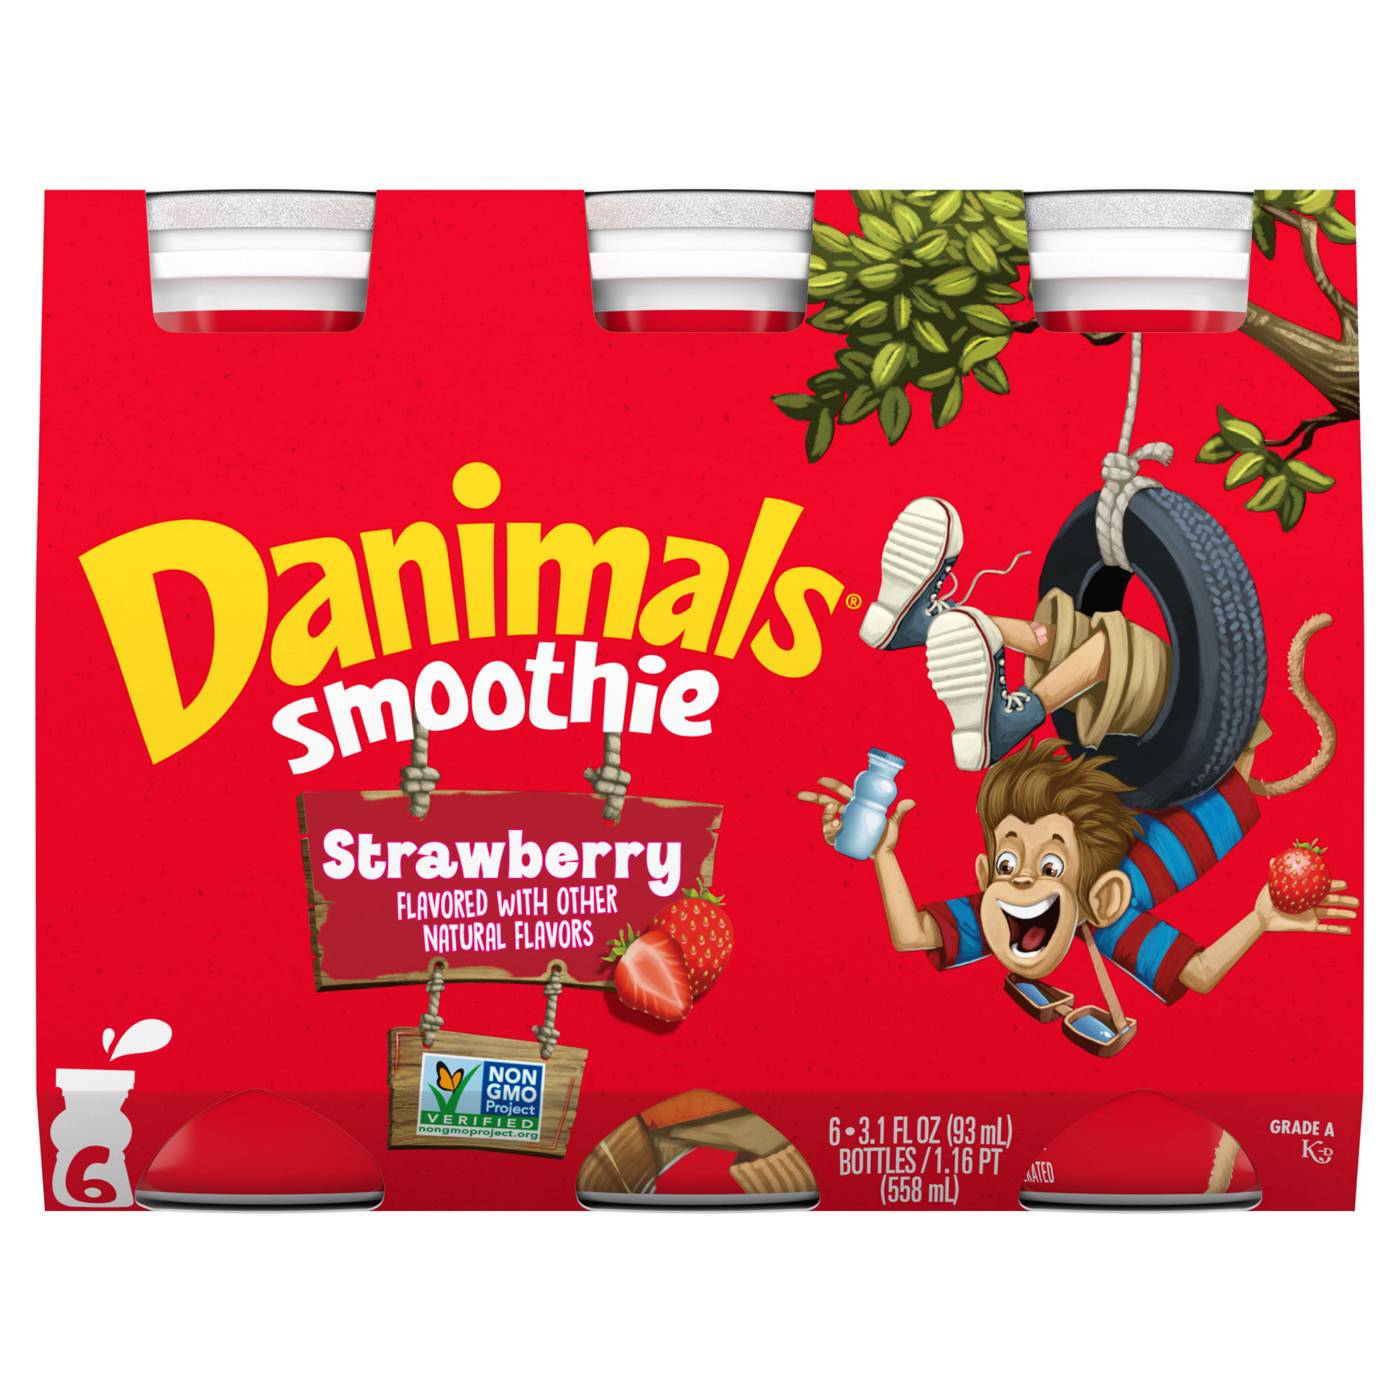 Danimals Strawberry Explosion Smoothies; image 1 of 2